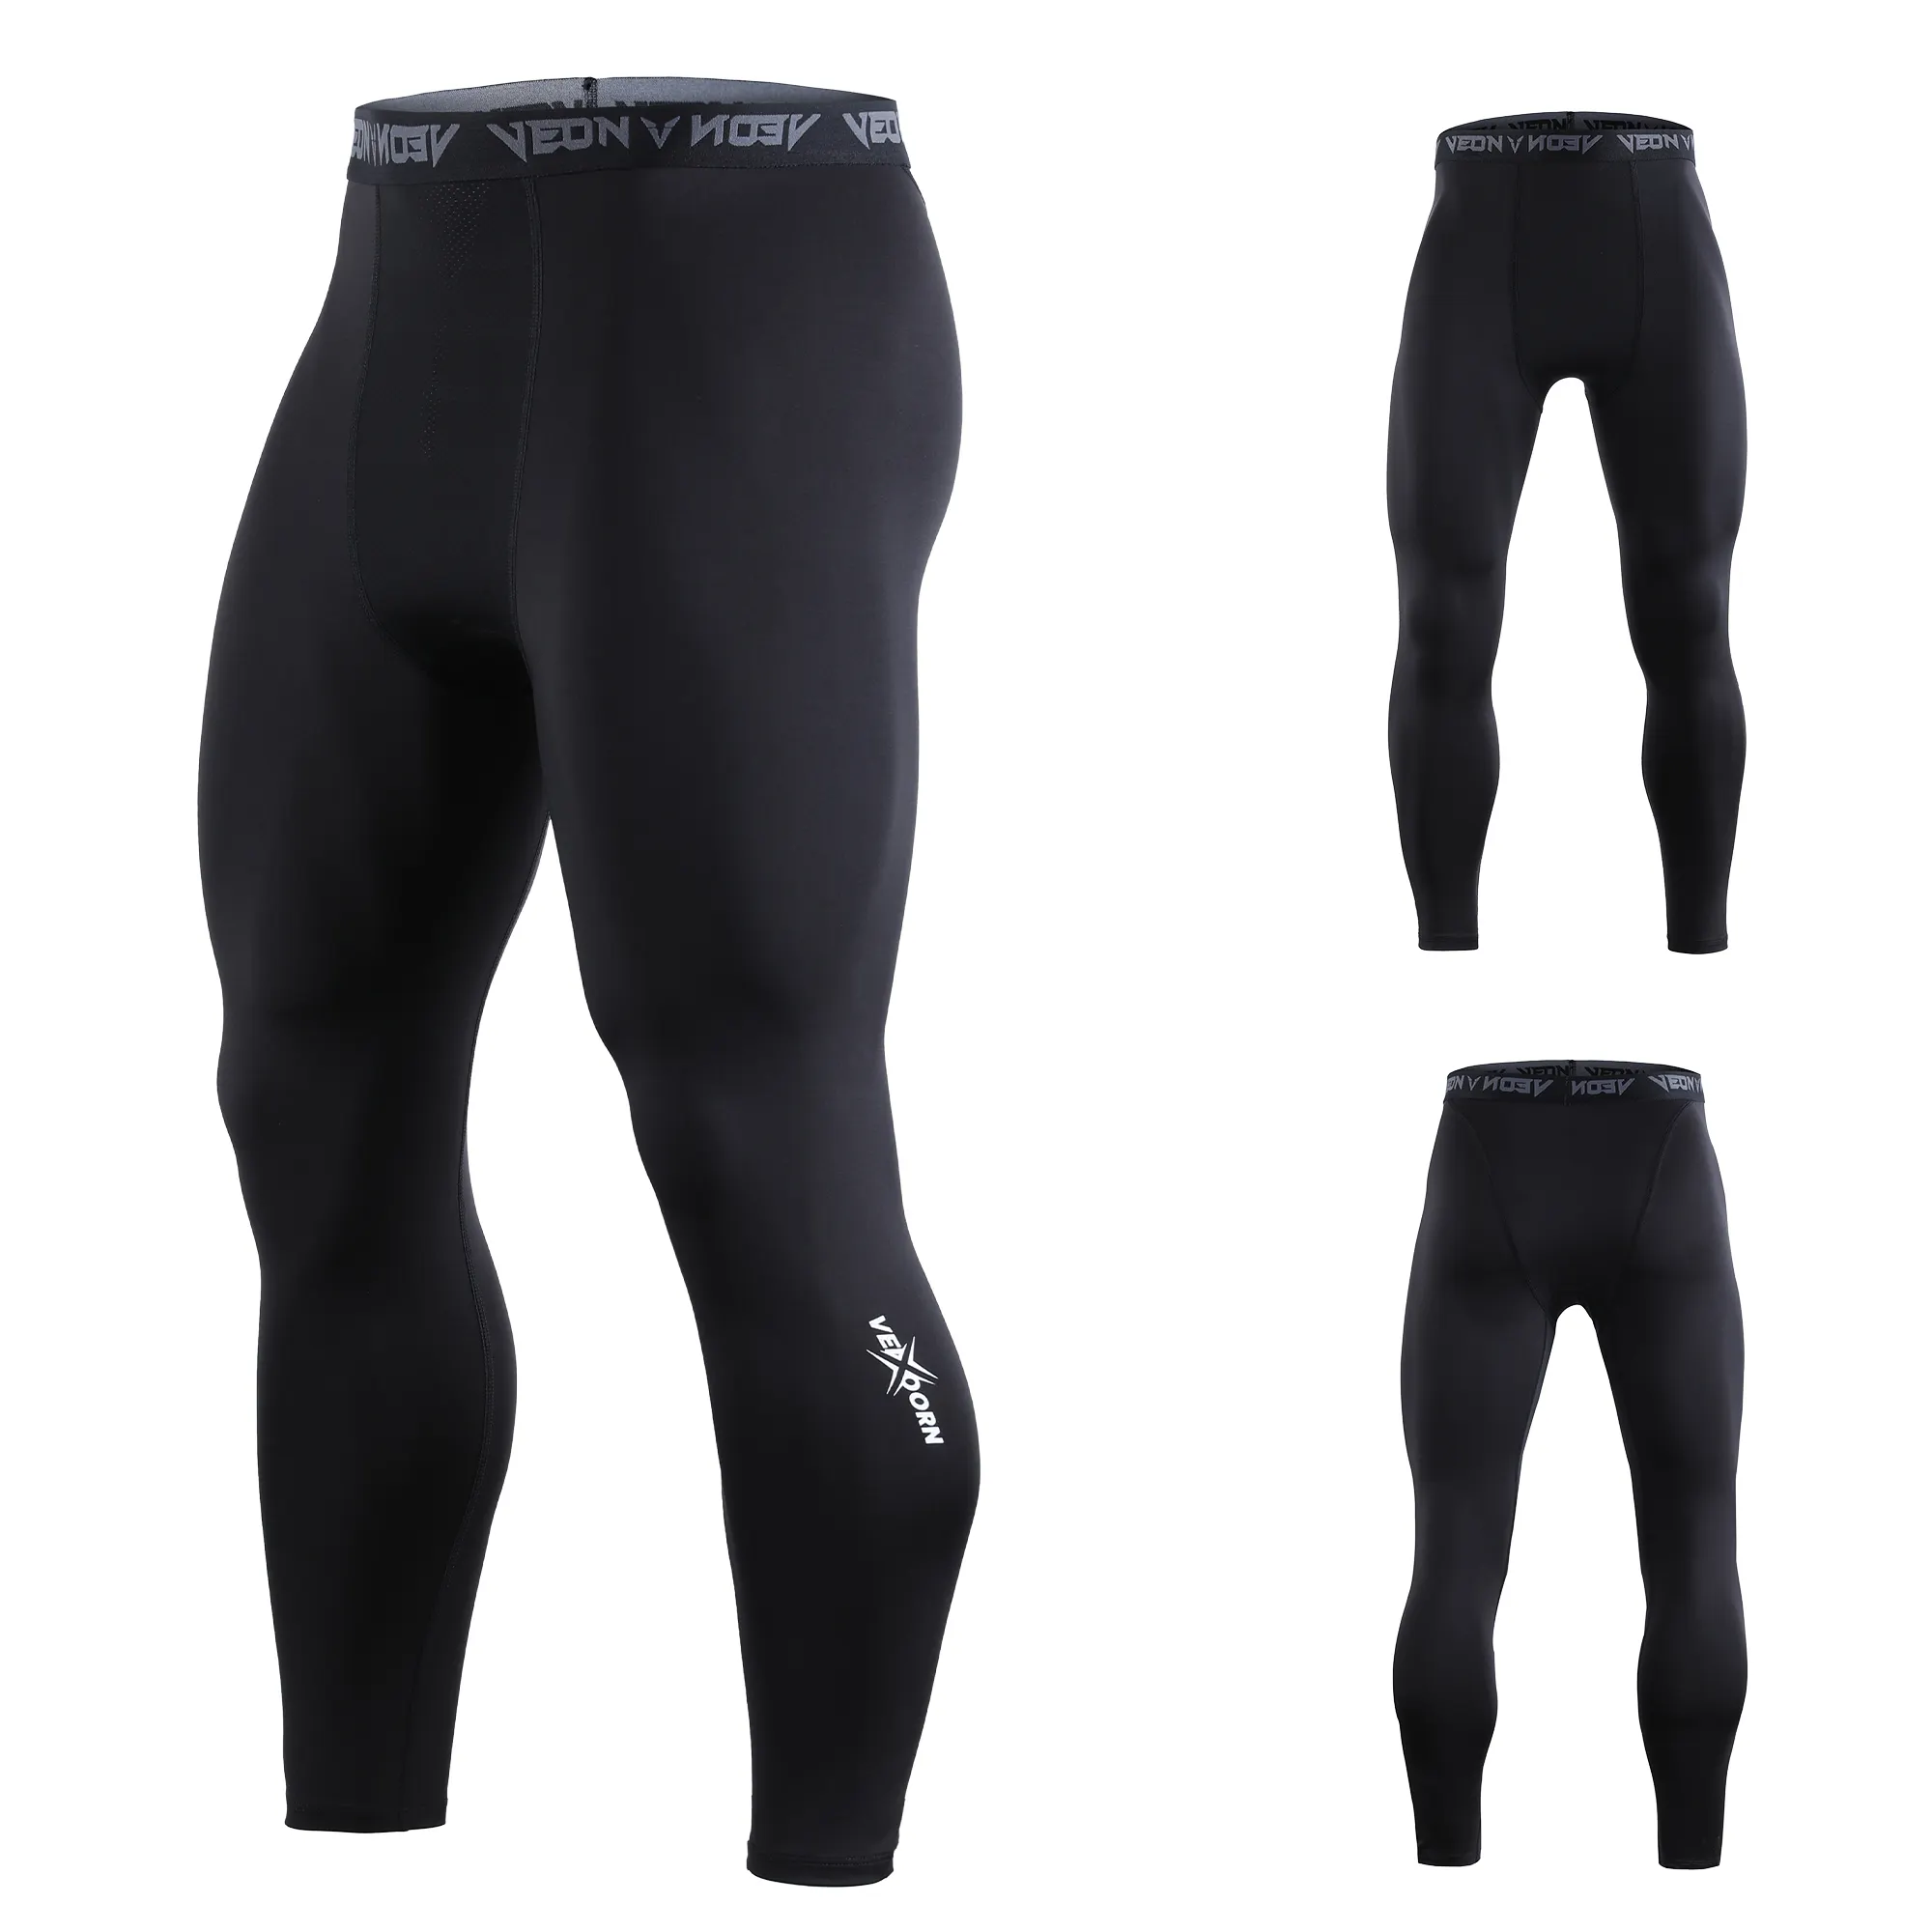 Pantalones de compresión para correr fitness con logotipo personalizado, ropa interior transpirable de secado rápido para hombre, medias de compresión de baloncesto